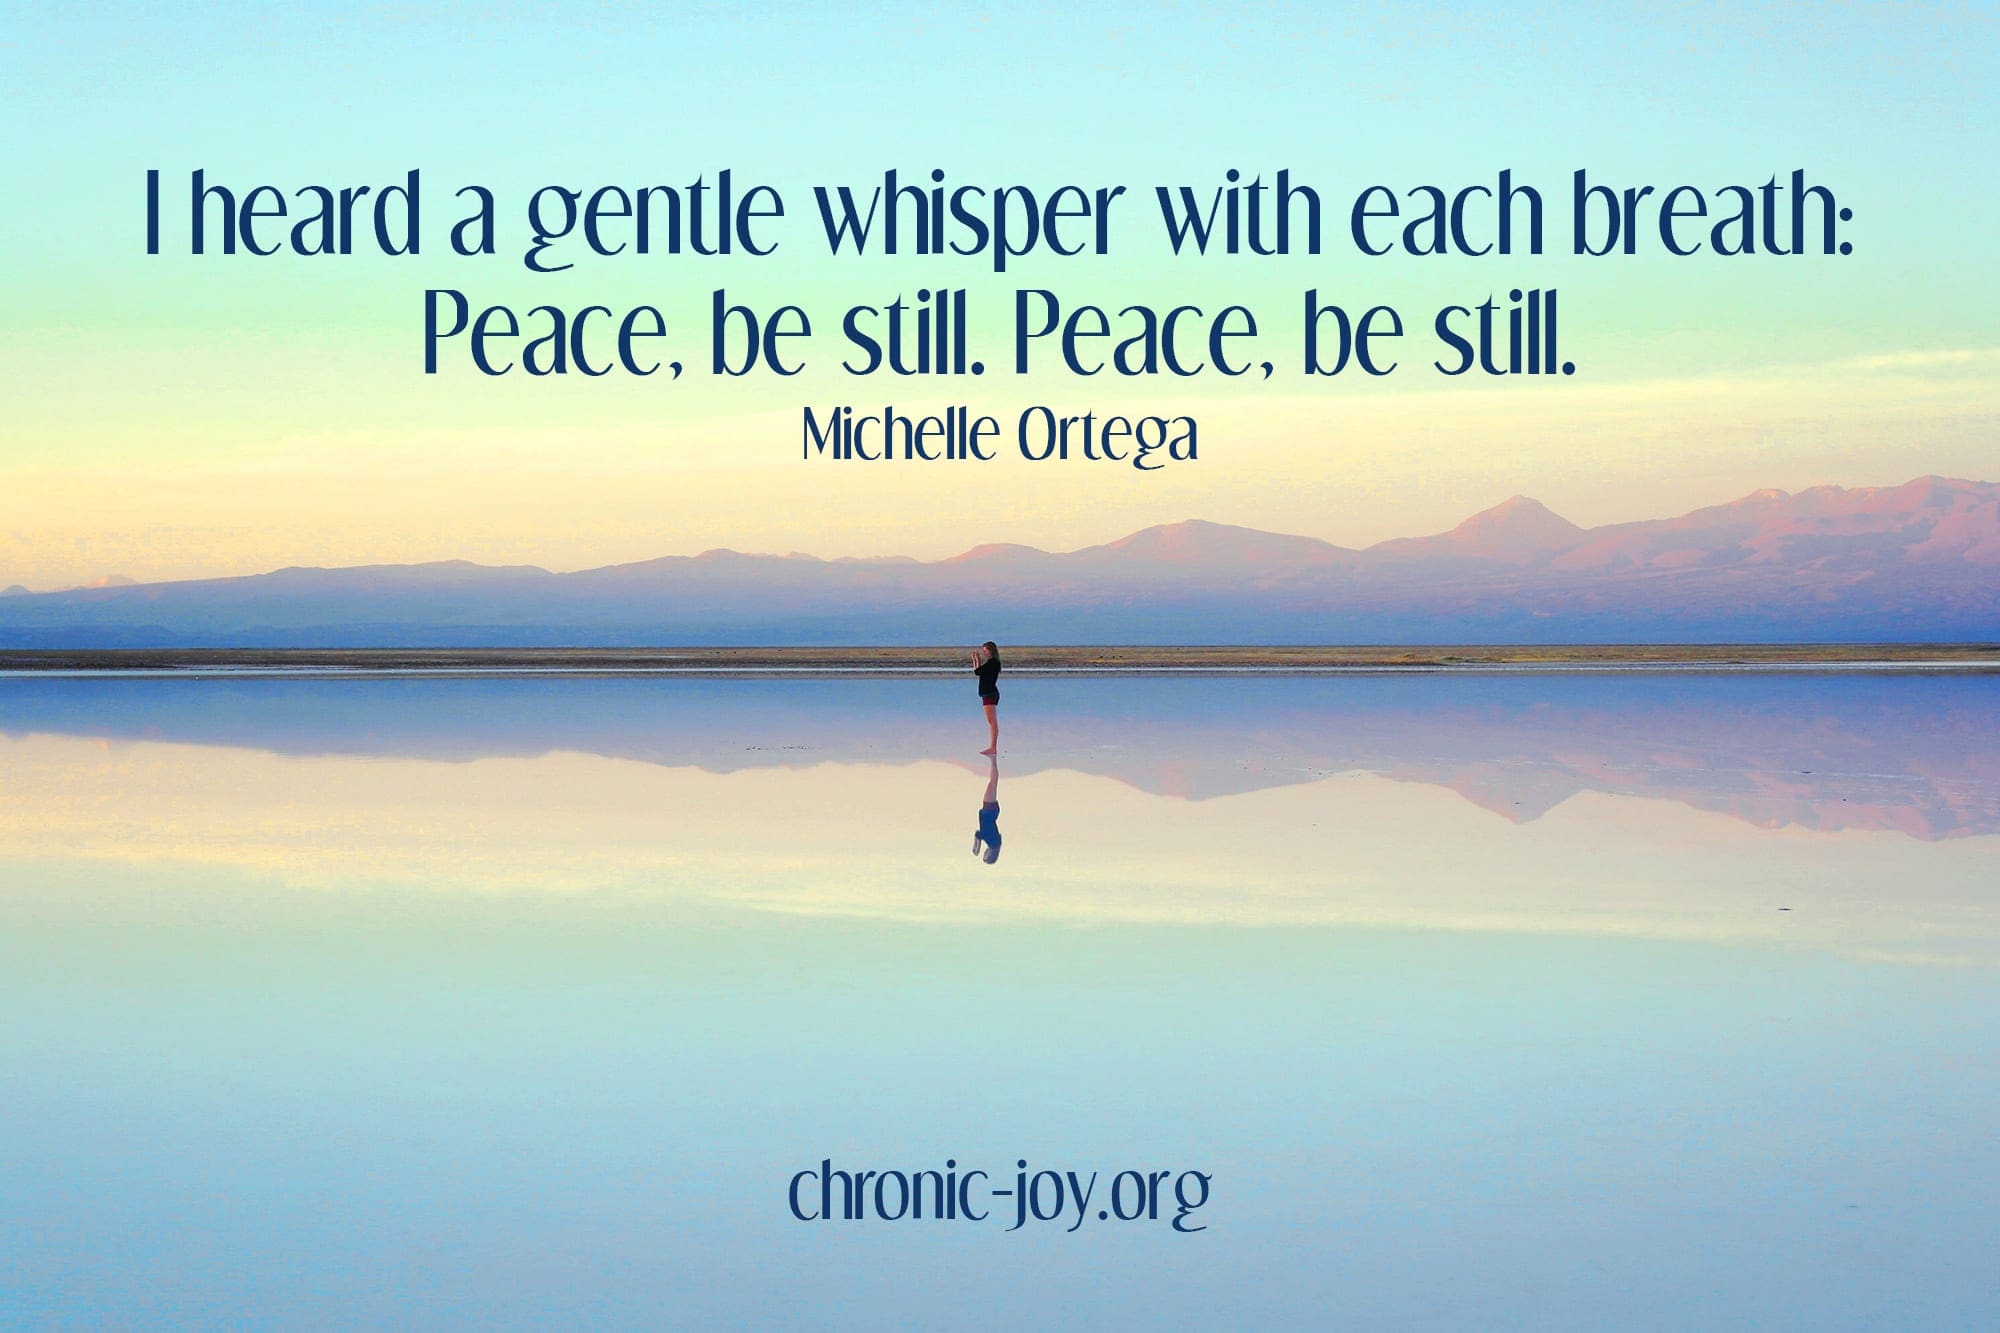 "I heard a gentle whisper with each breath: Peace, be still. Peace, be still. " Michelle Ortega